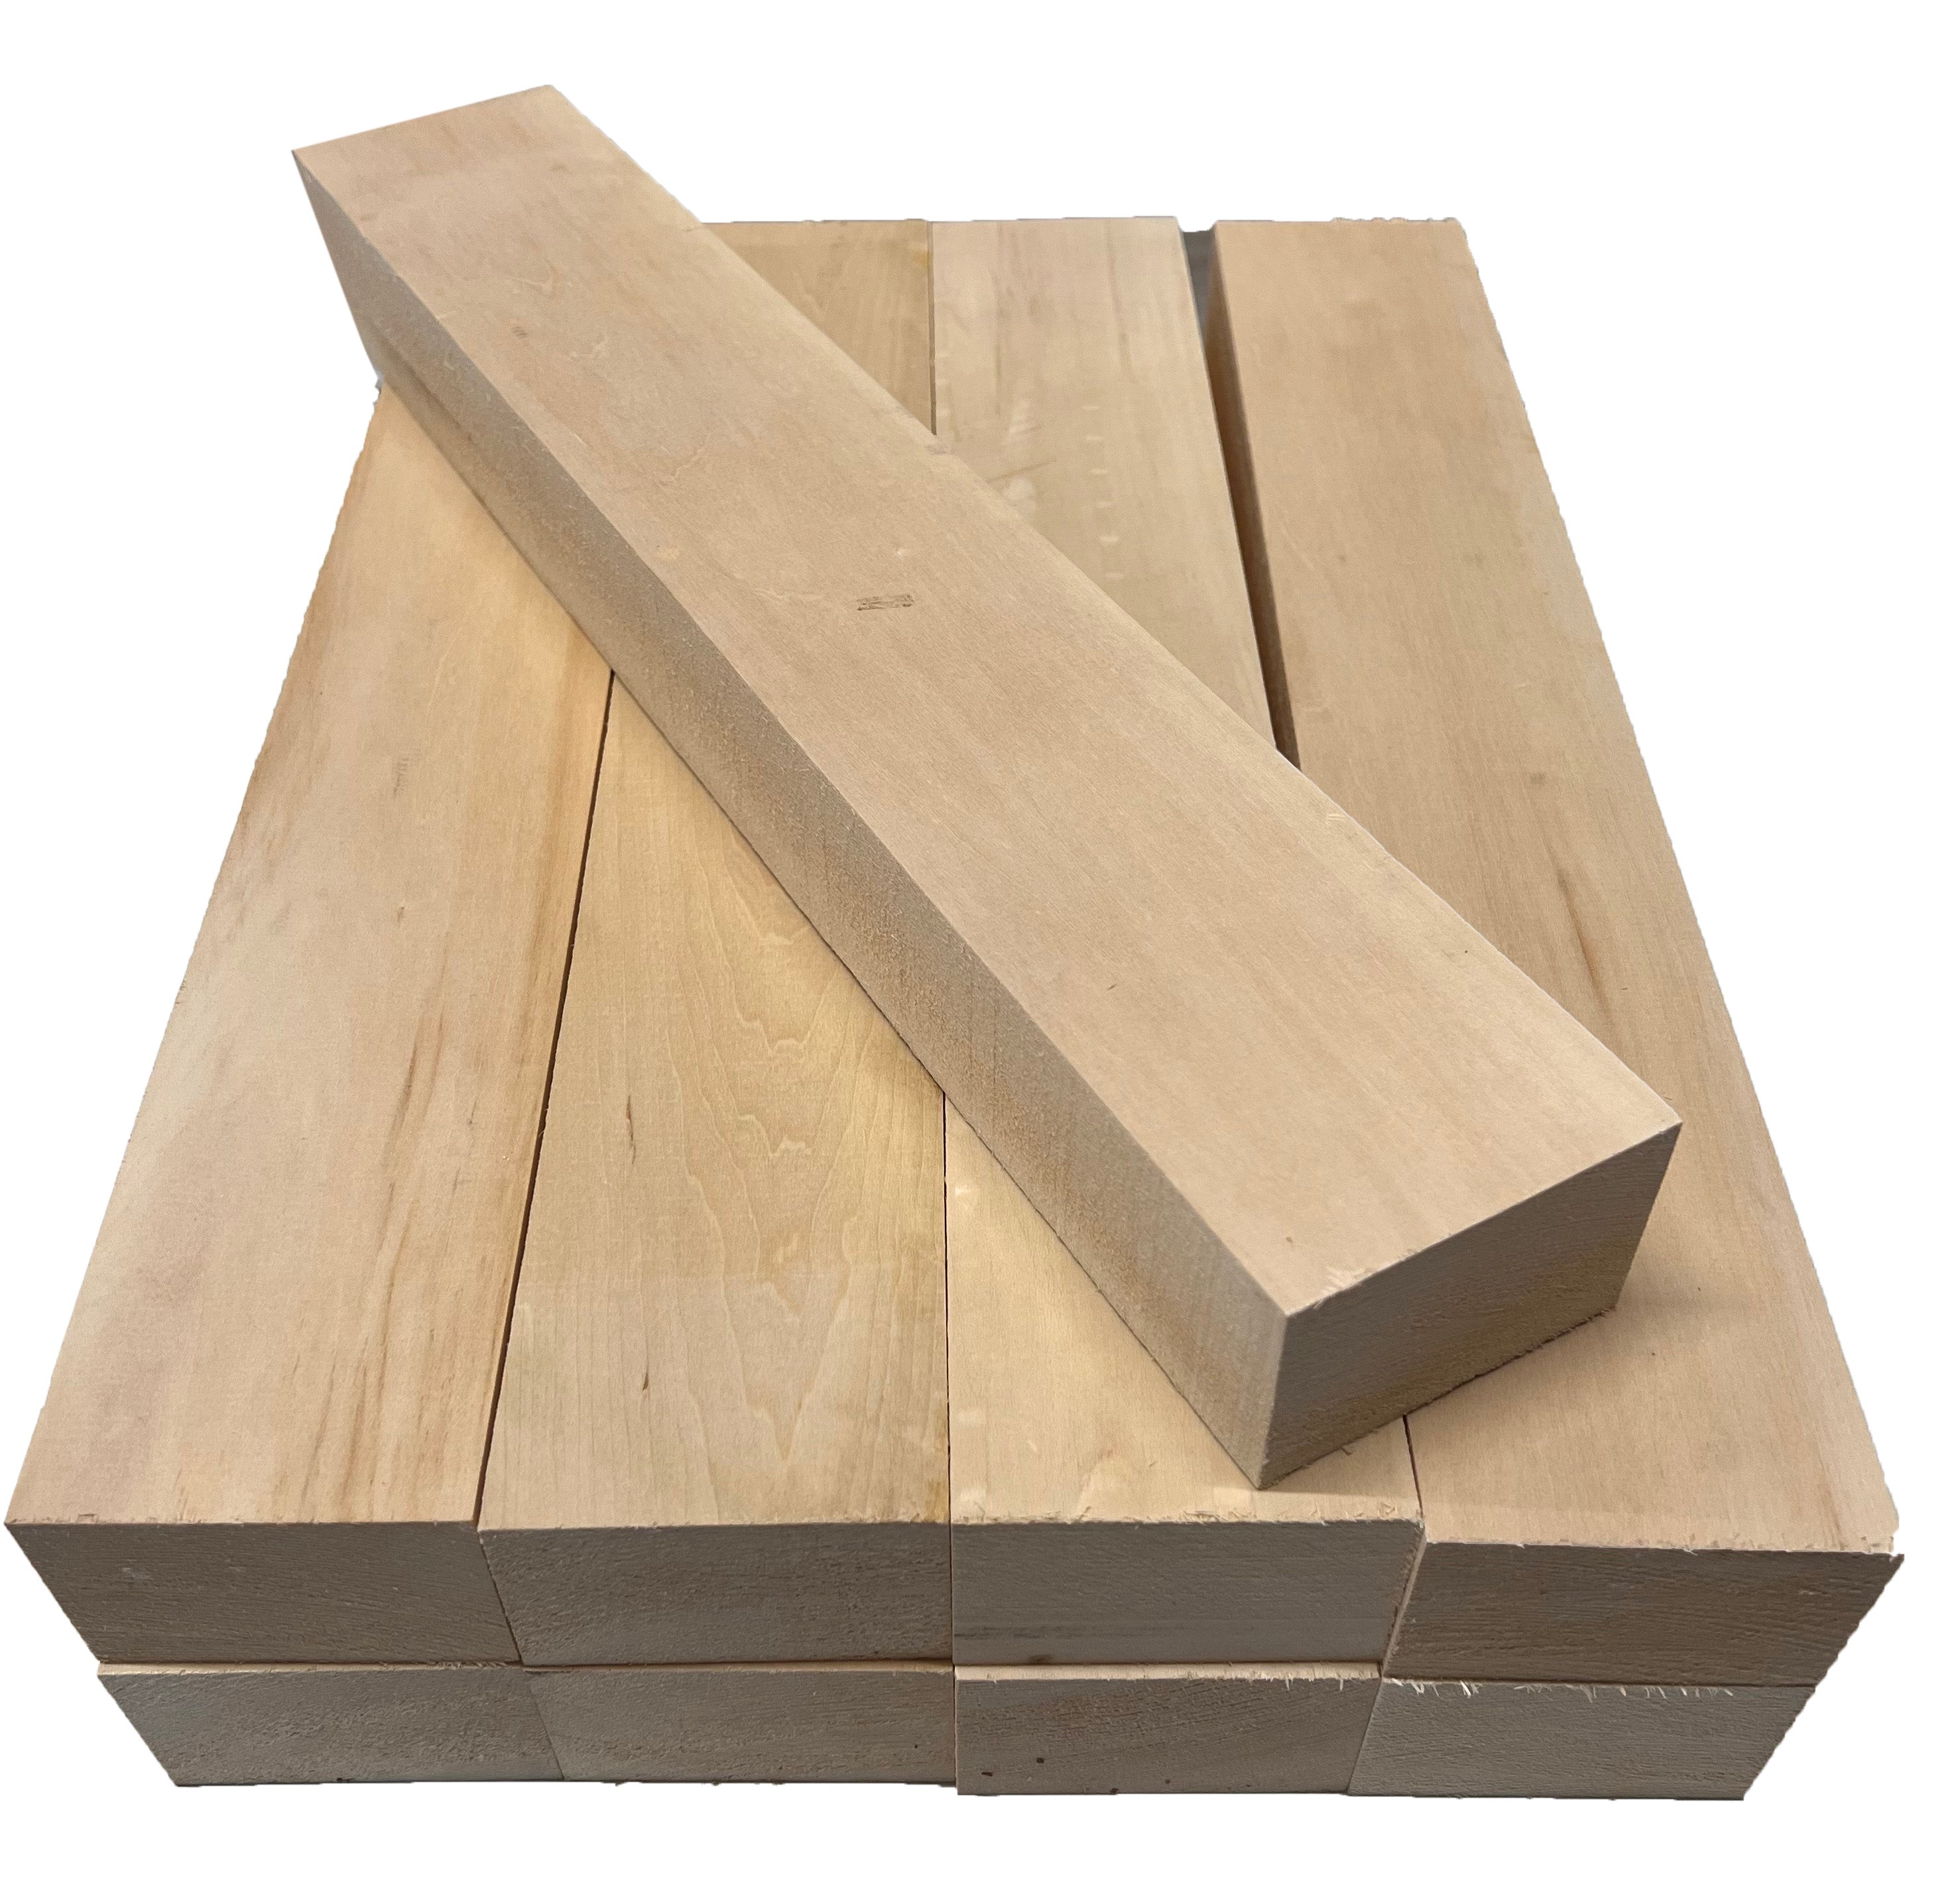 2 x 2 x 4 Basswood Carving Wood Blocks Craft Lumber BUY IN BULK 100  pieces!